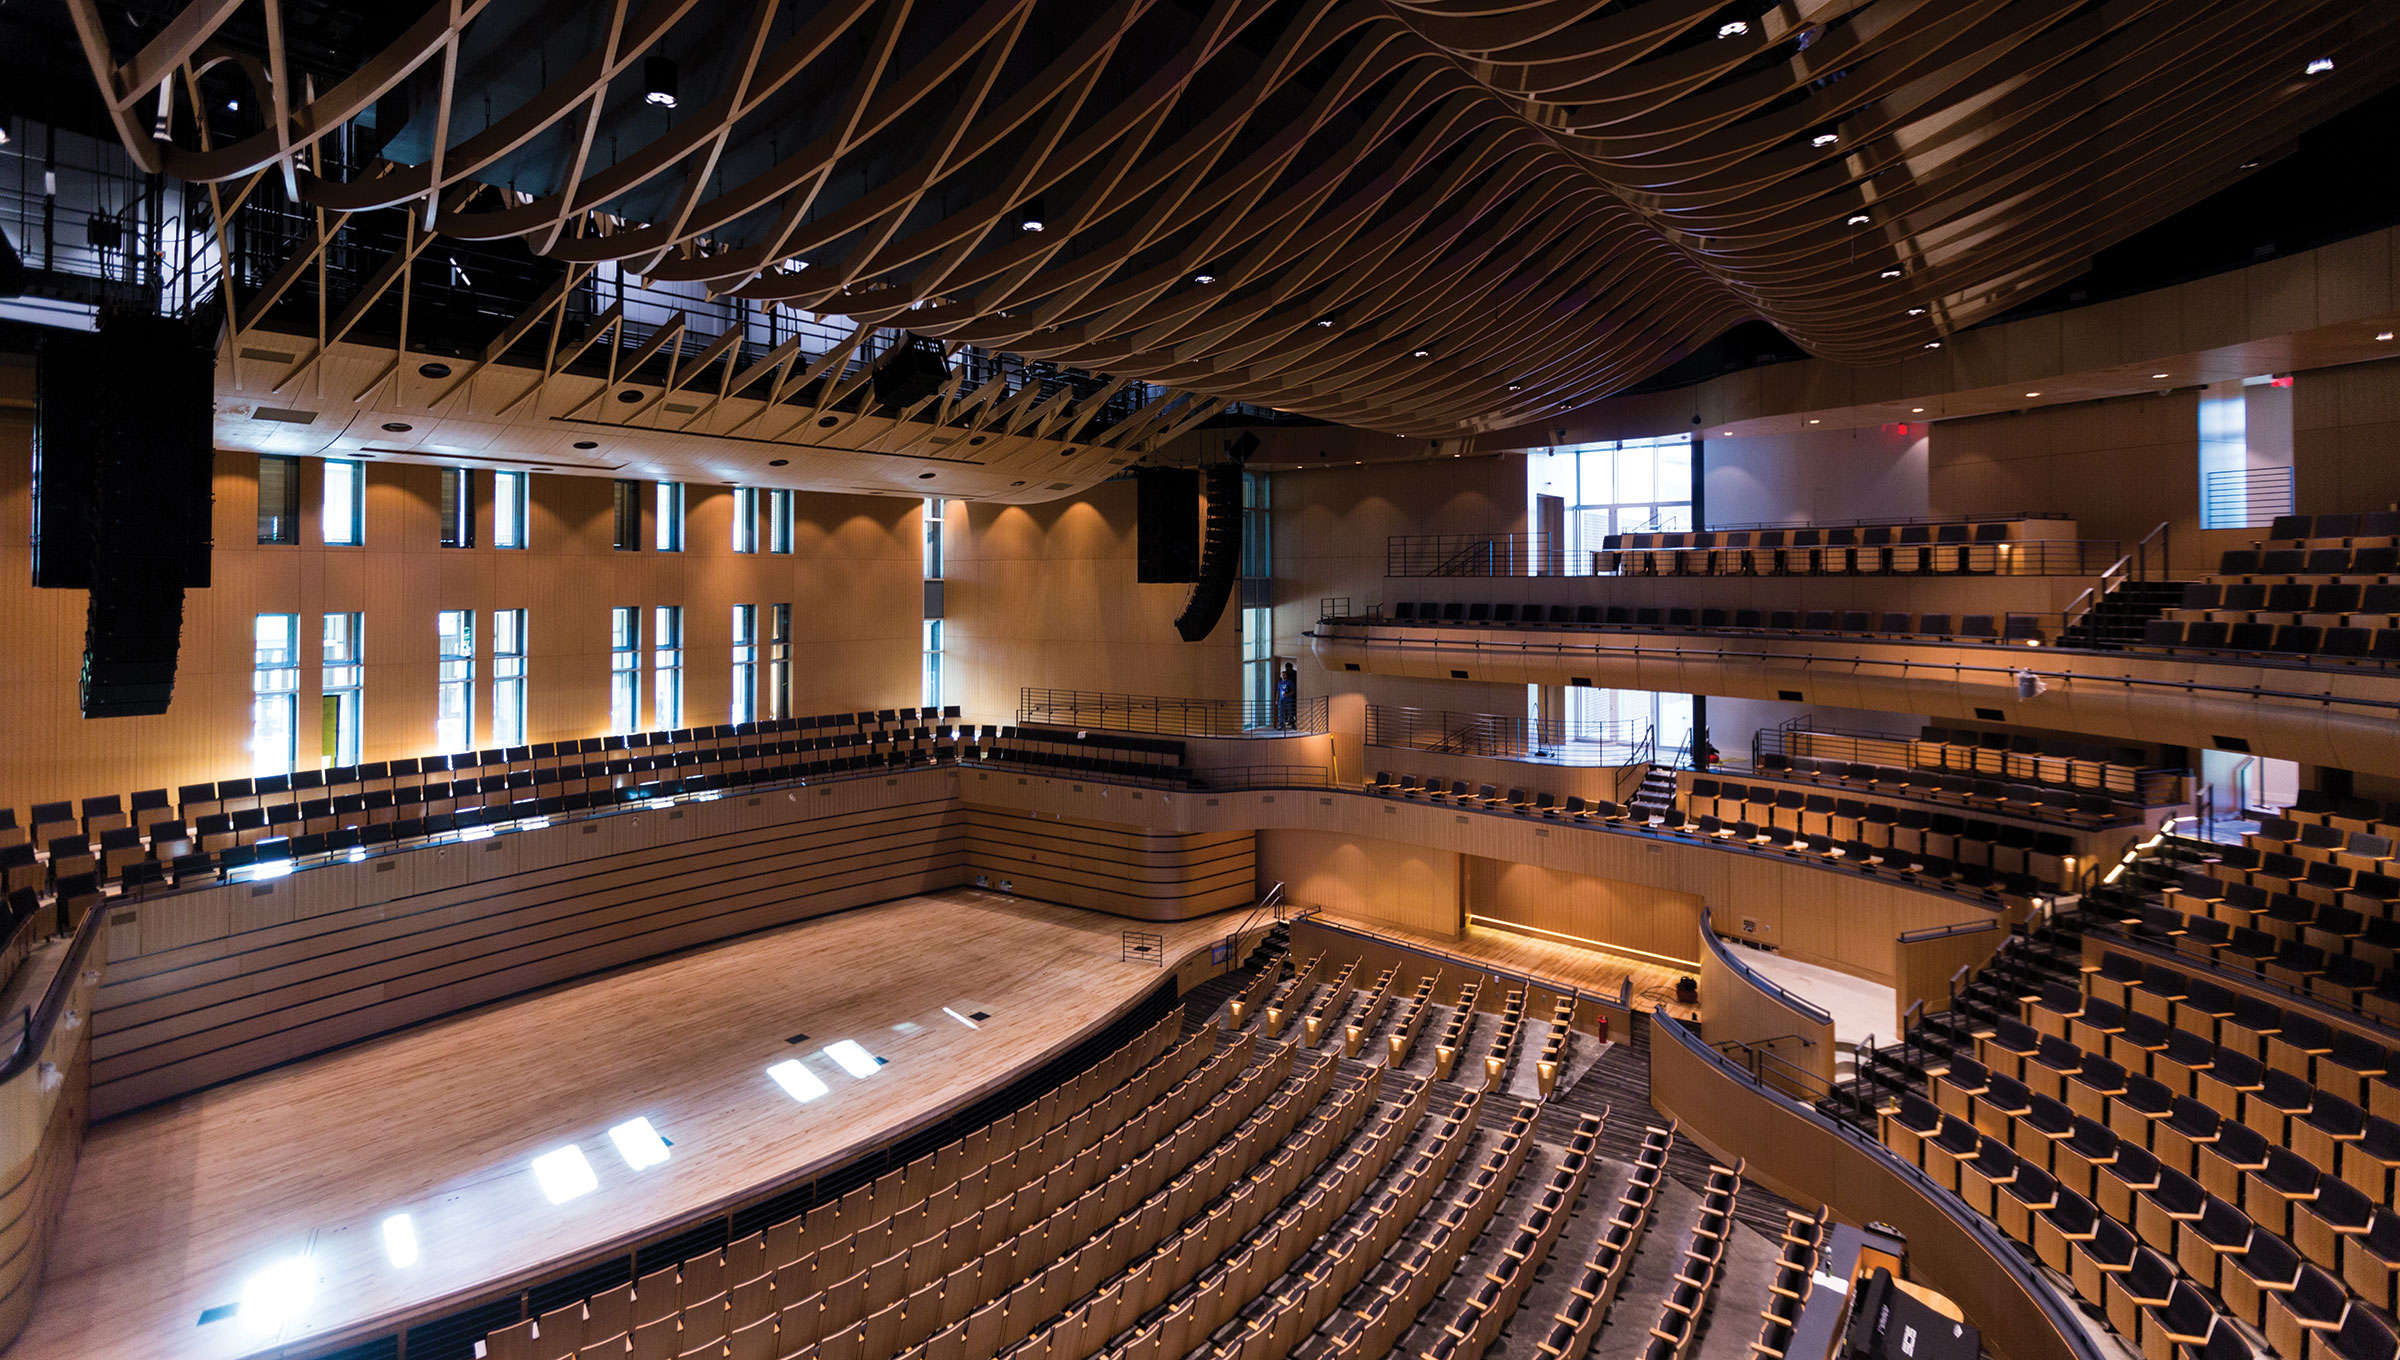 A look inside Liberty University's new 1,600 seat fine arts concert hall.